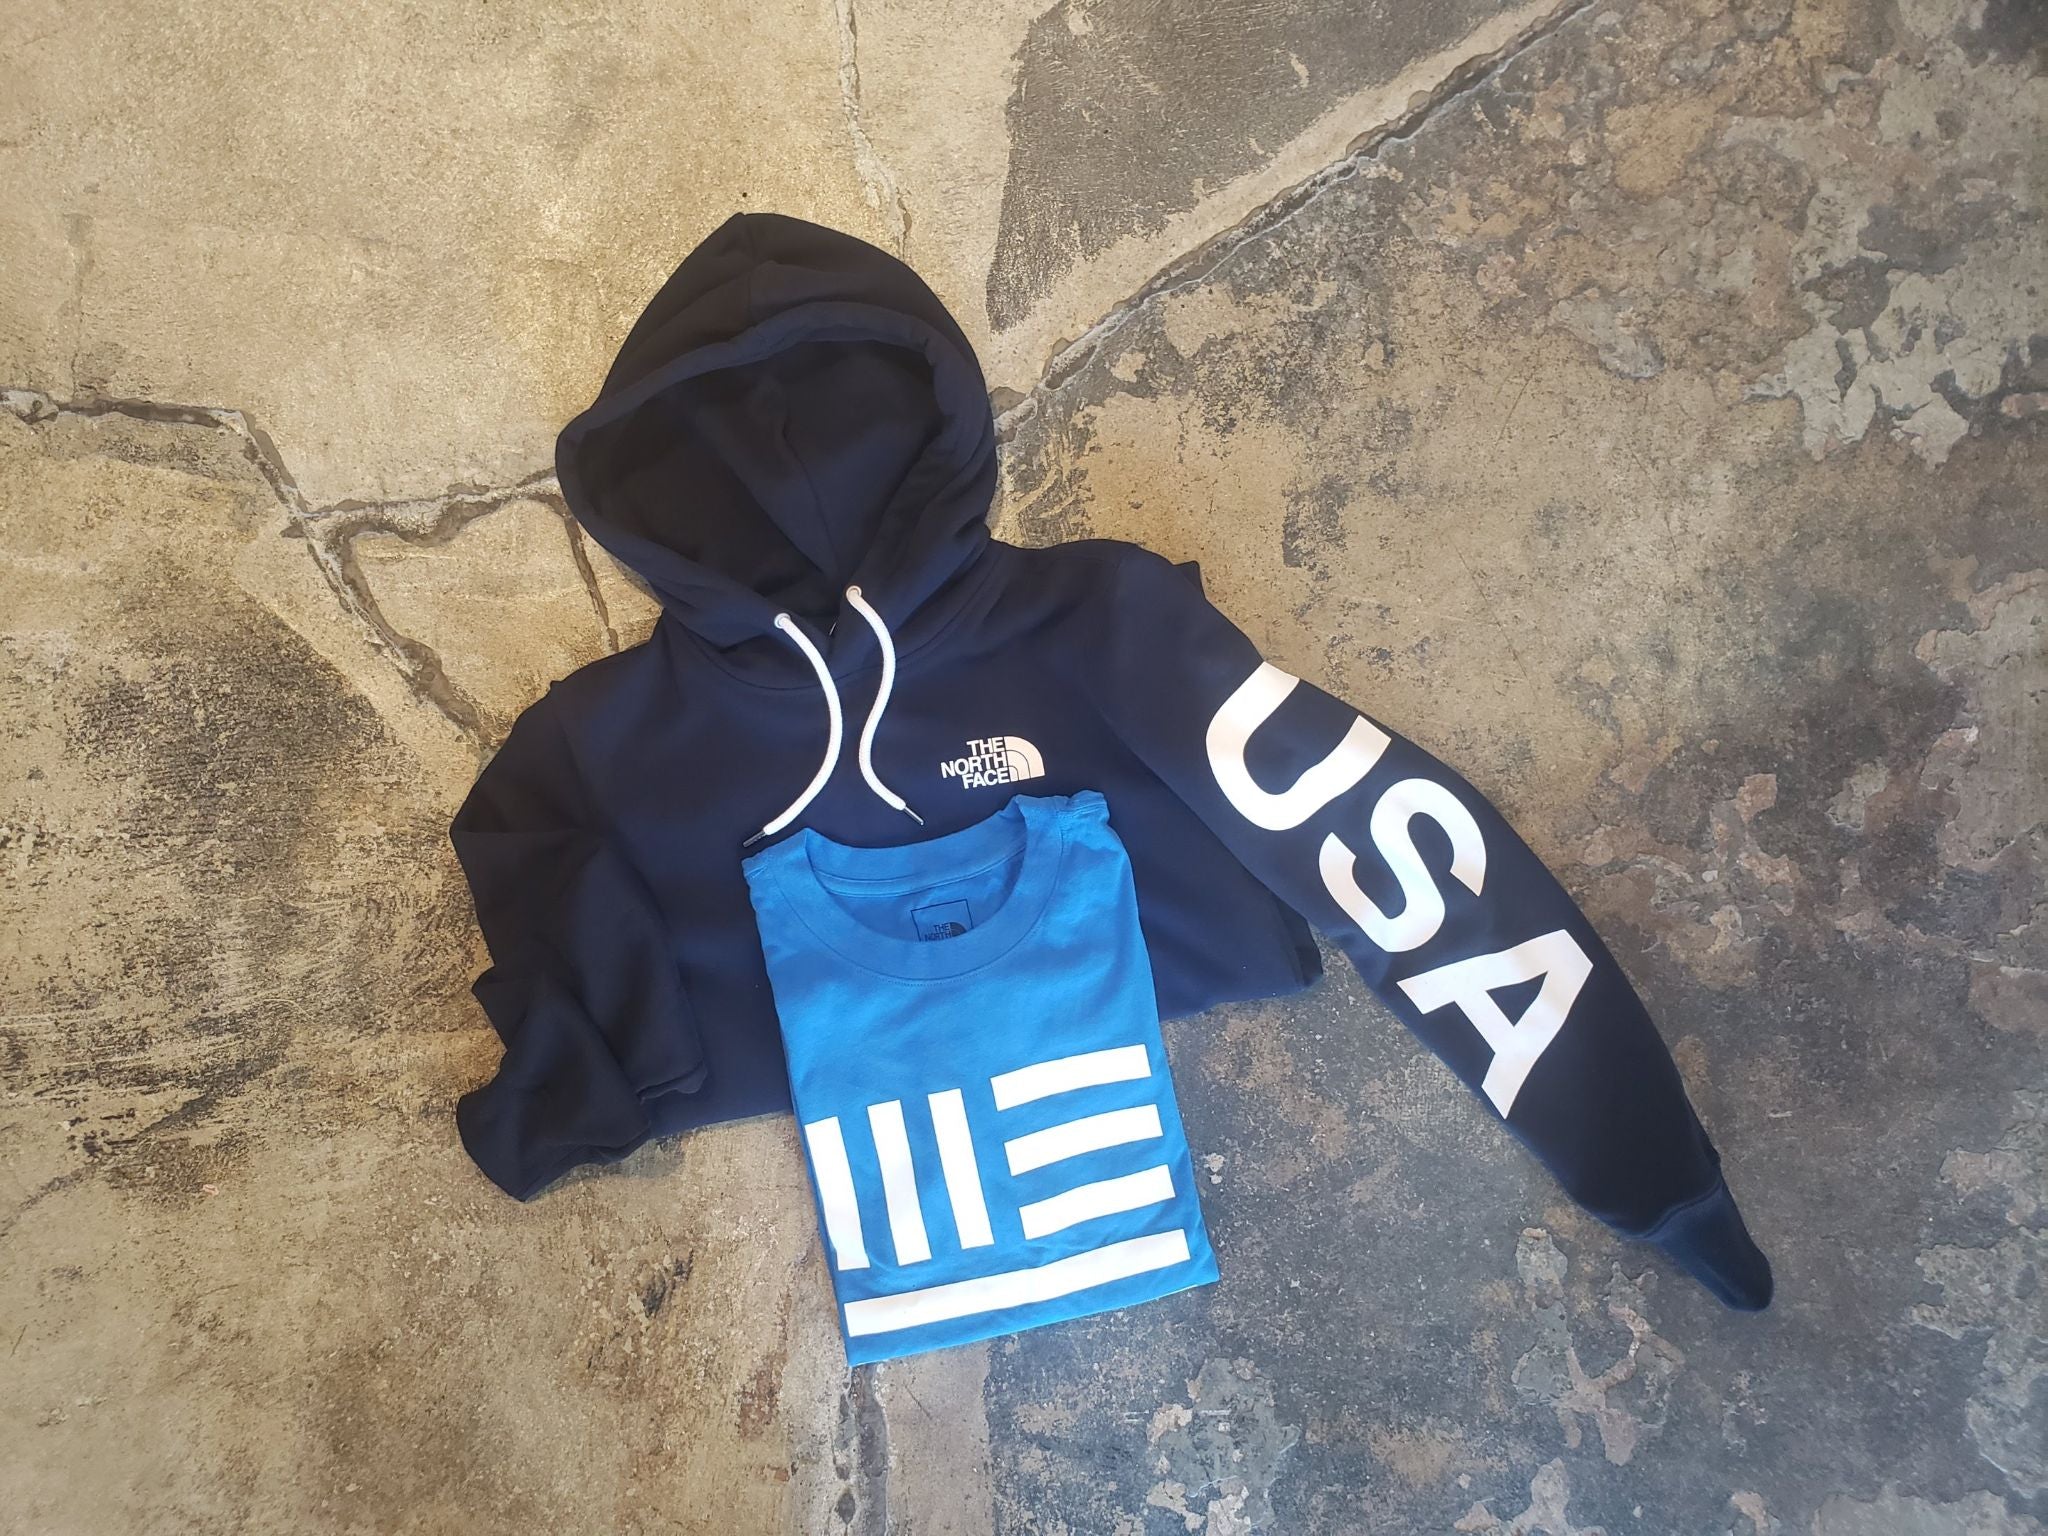 The North Face women’s Team USA sweatshirt and men’s t-shirt